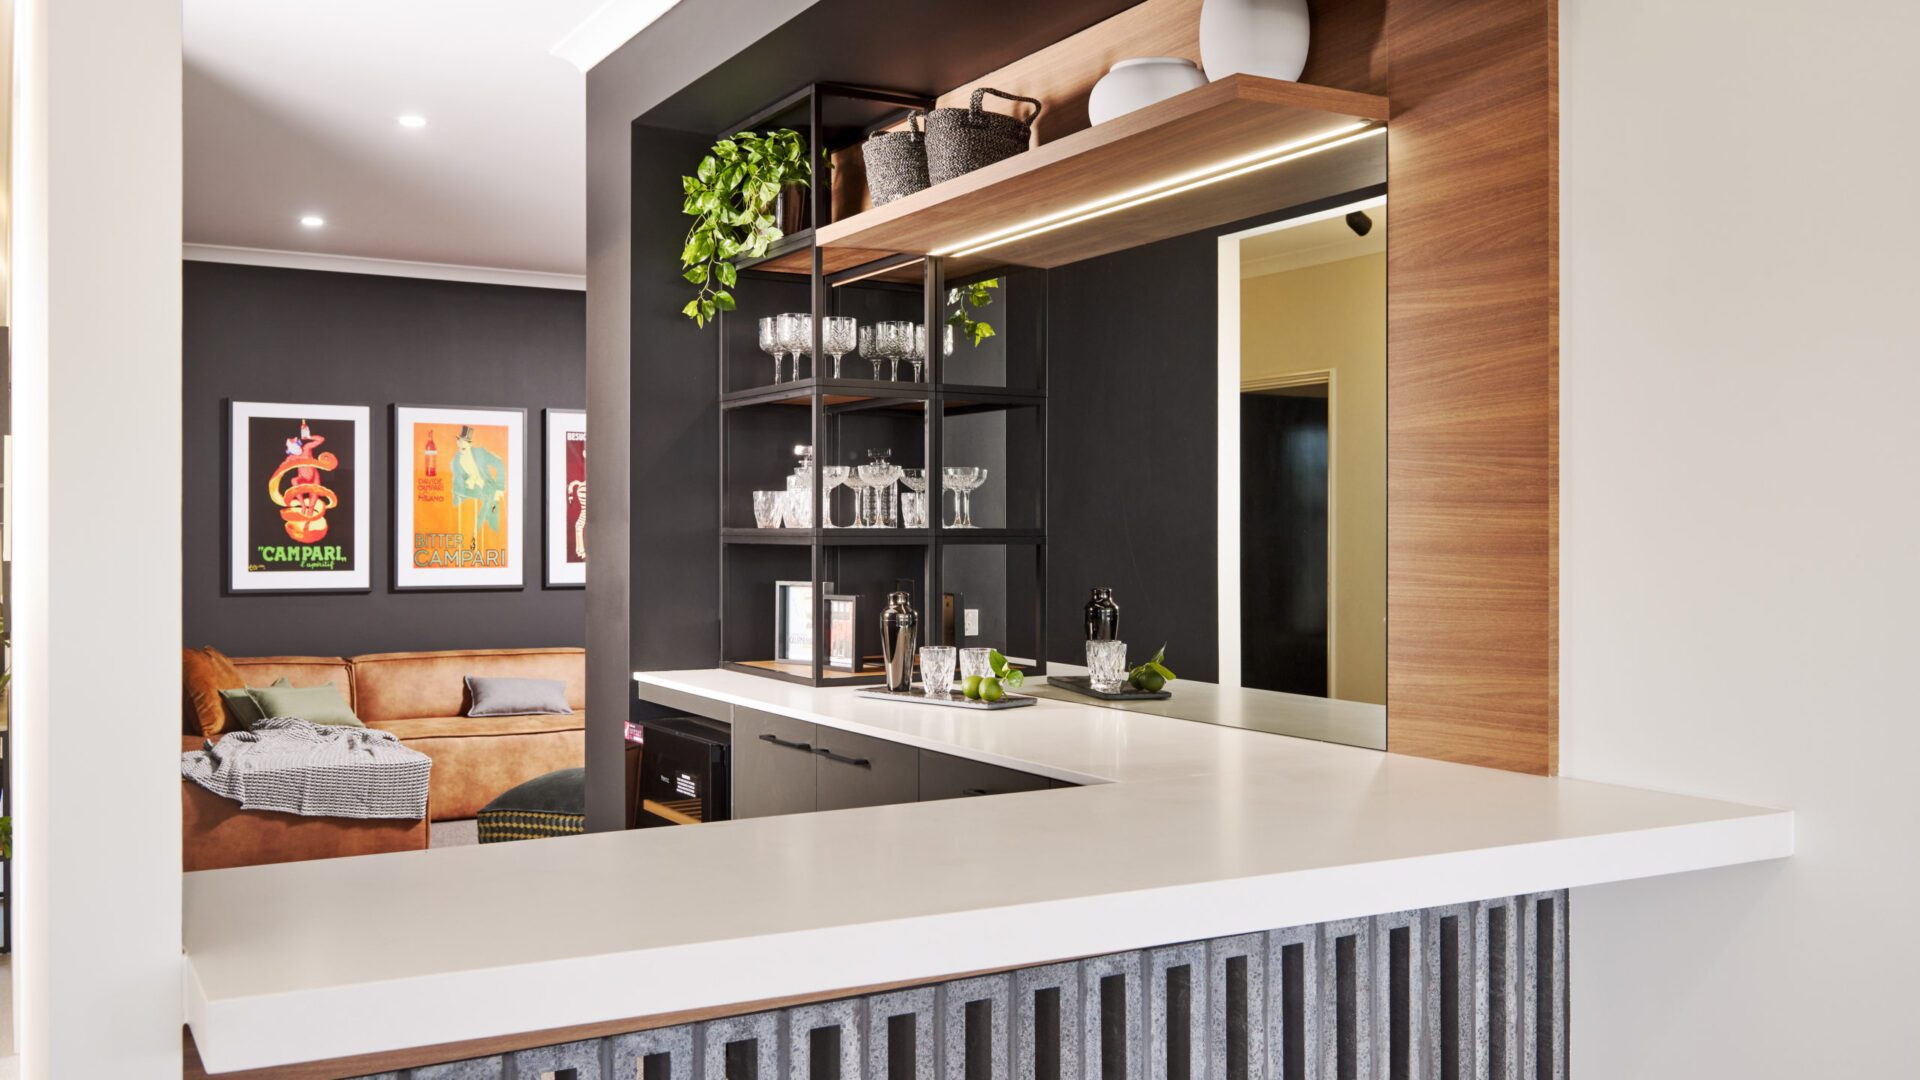 WACB Blog covid-19 affecting home design